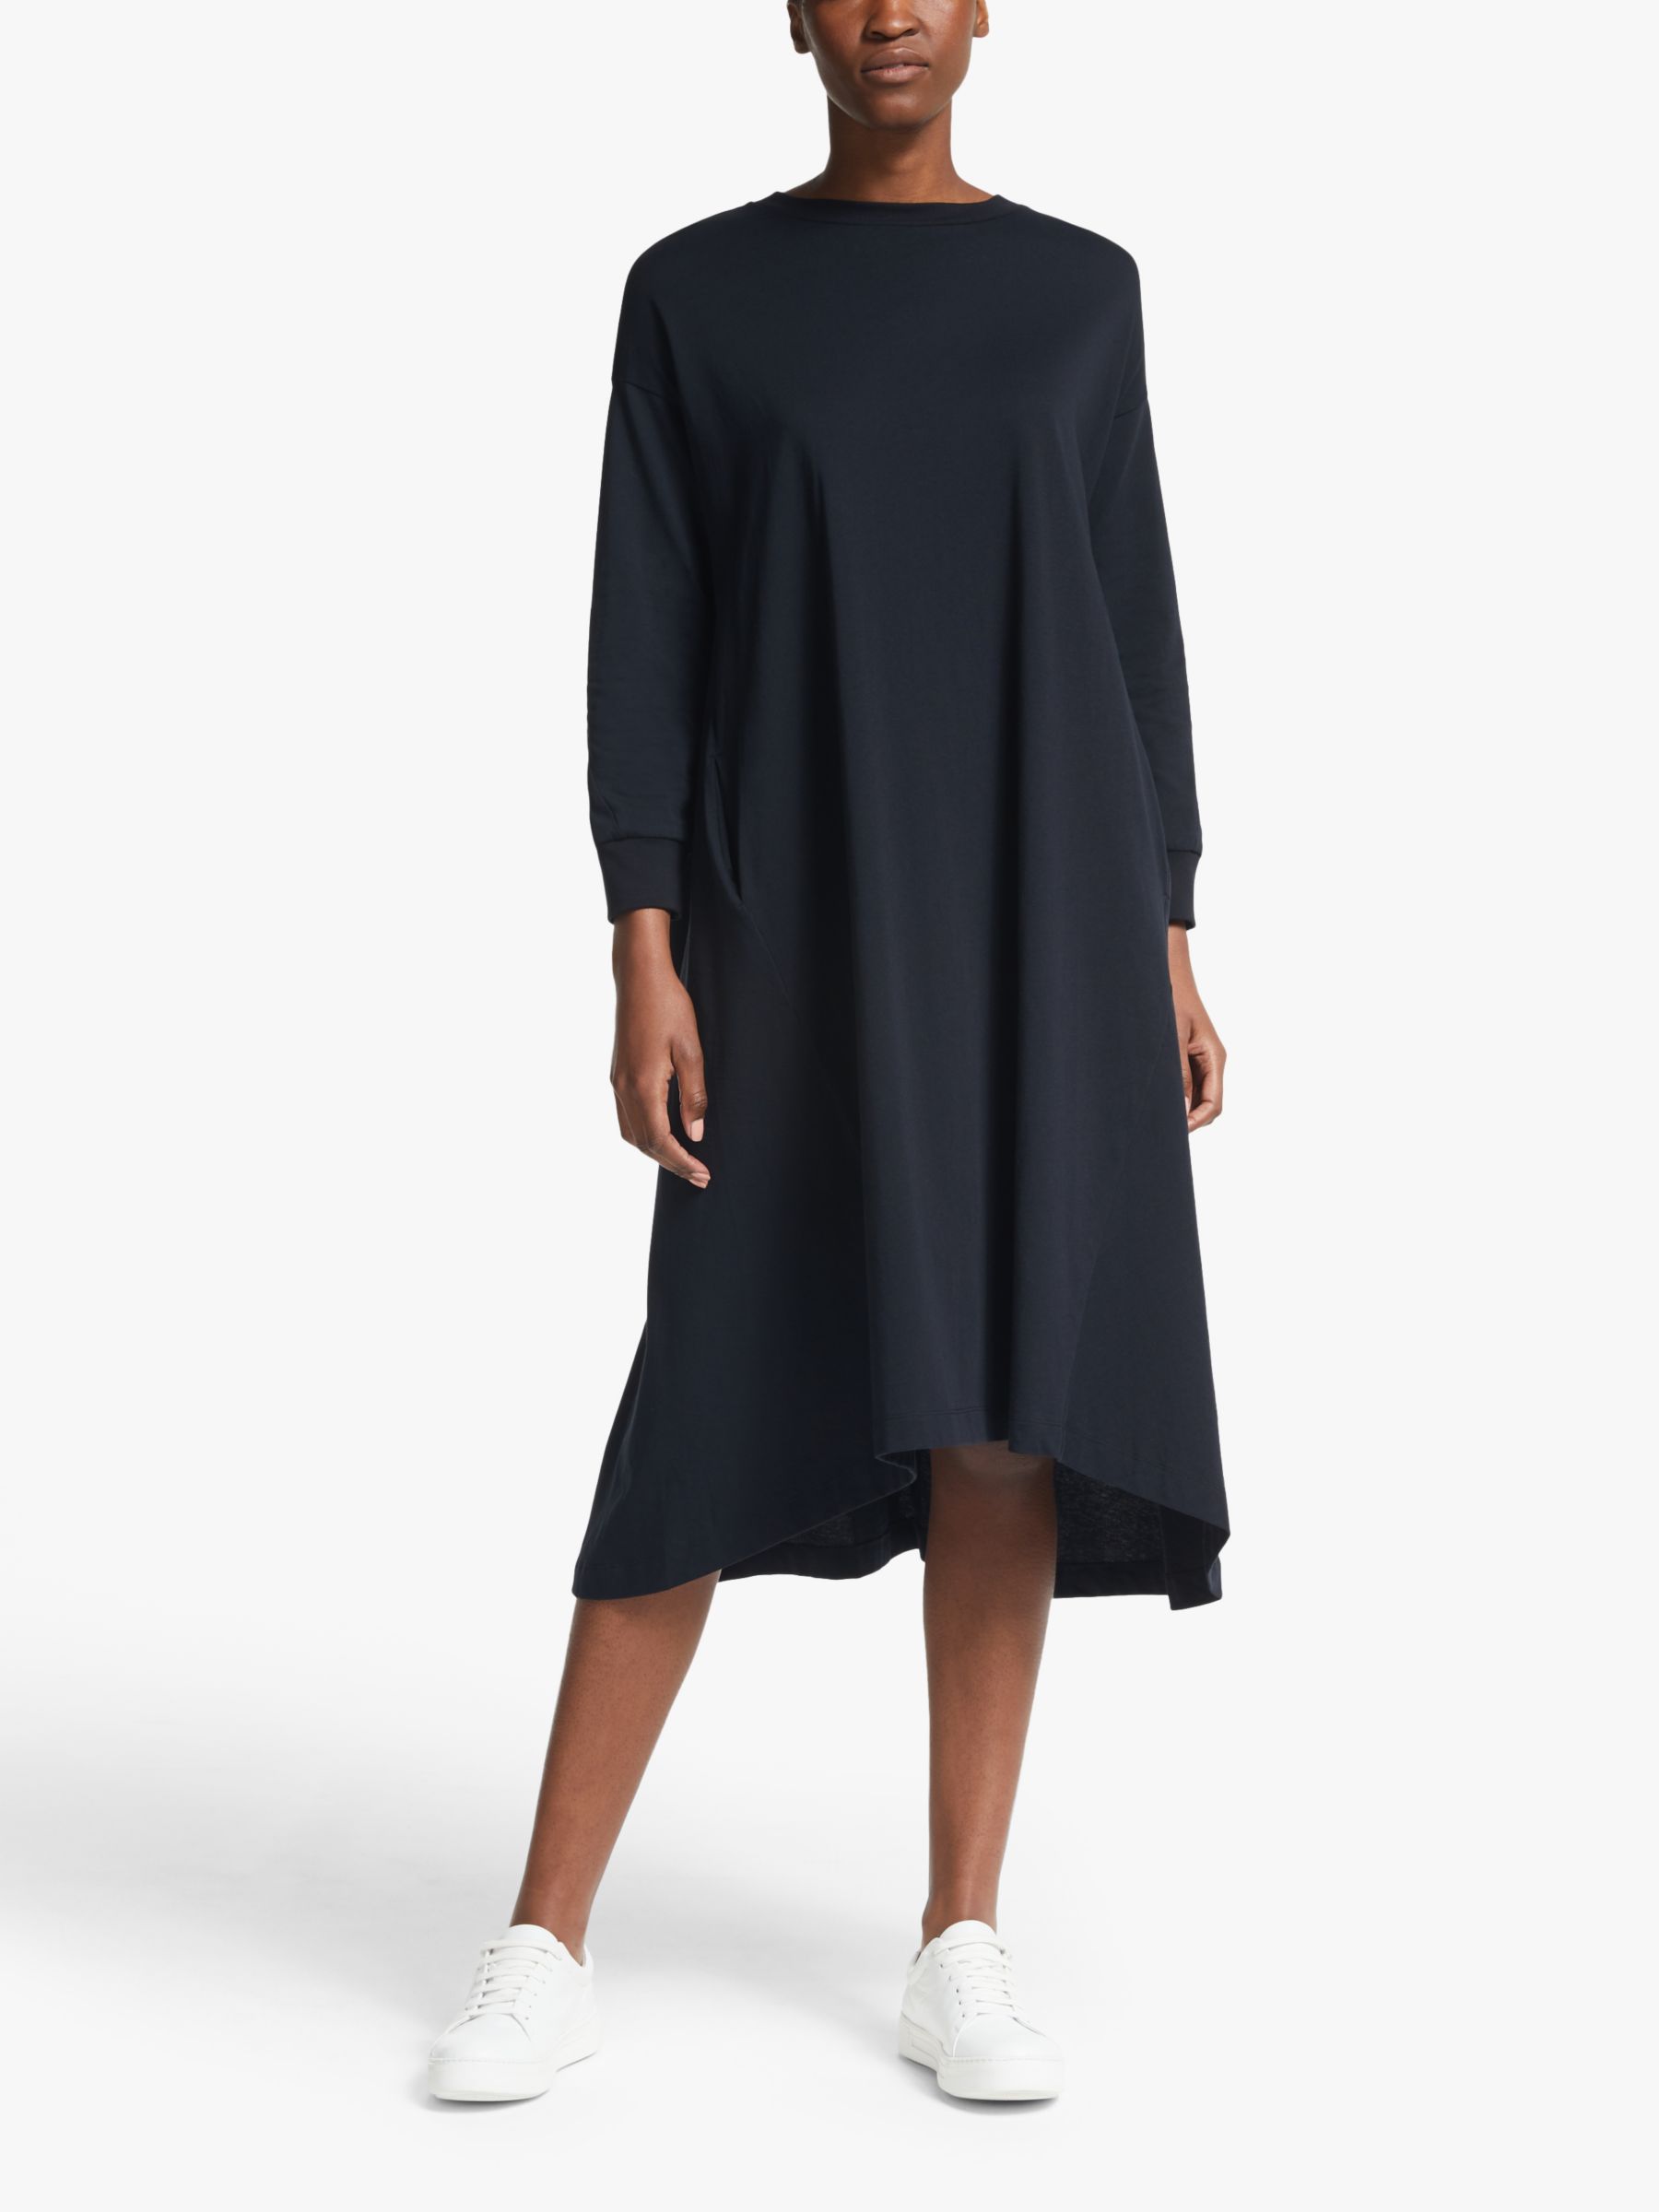 Kin Angled Seam Jersey Dress, Black at John Lewis & Partners